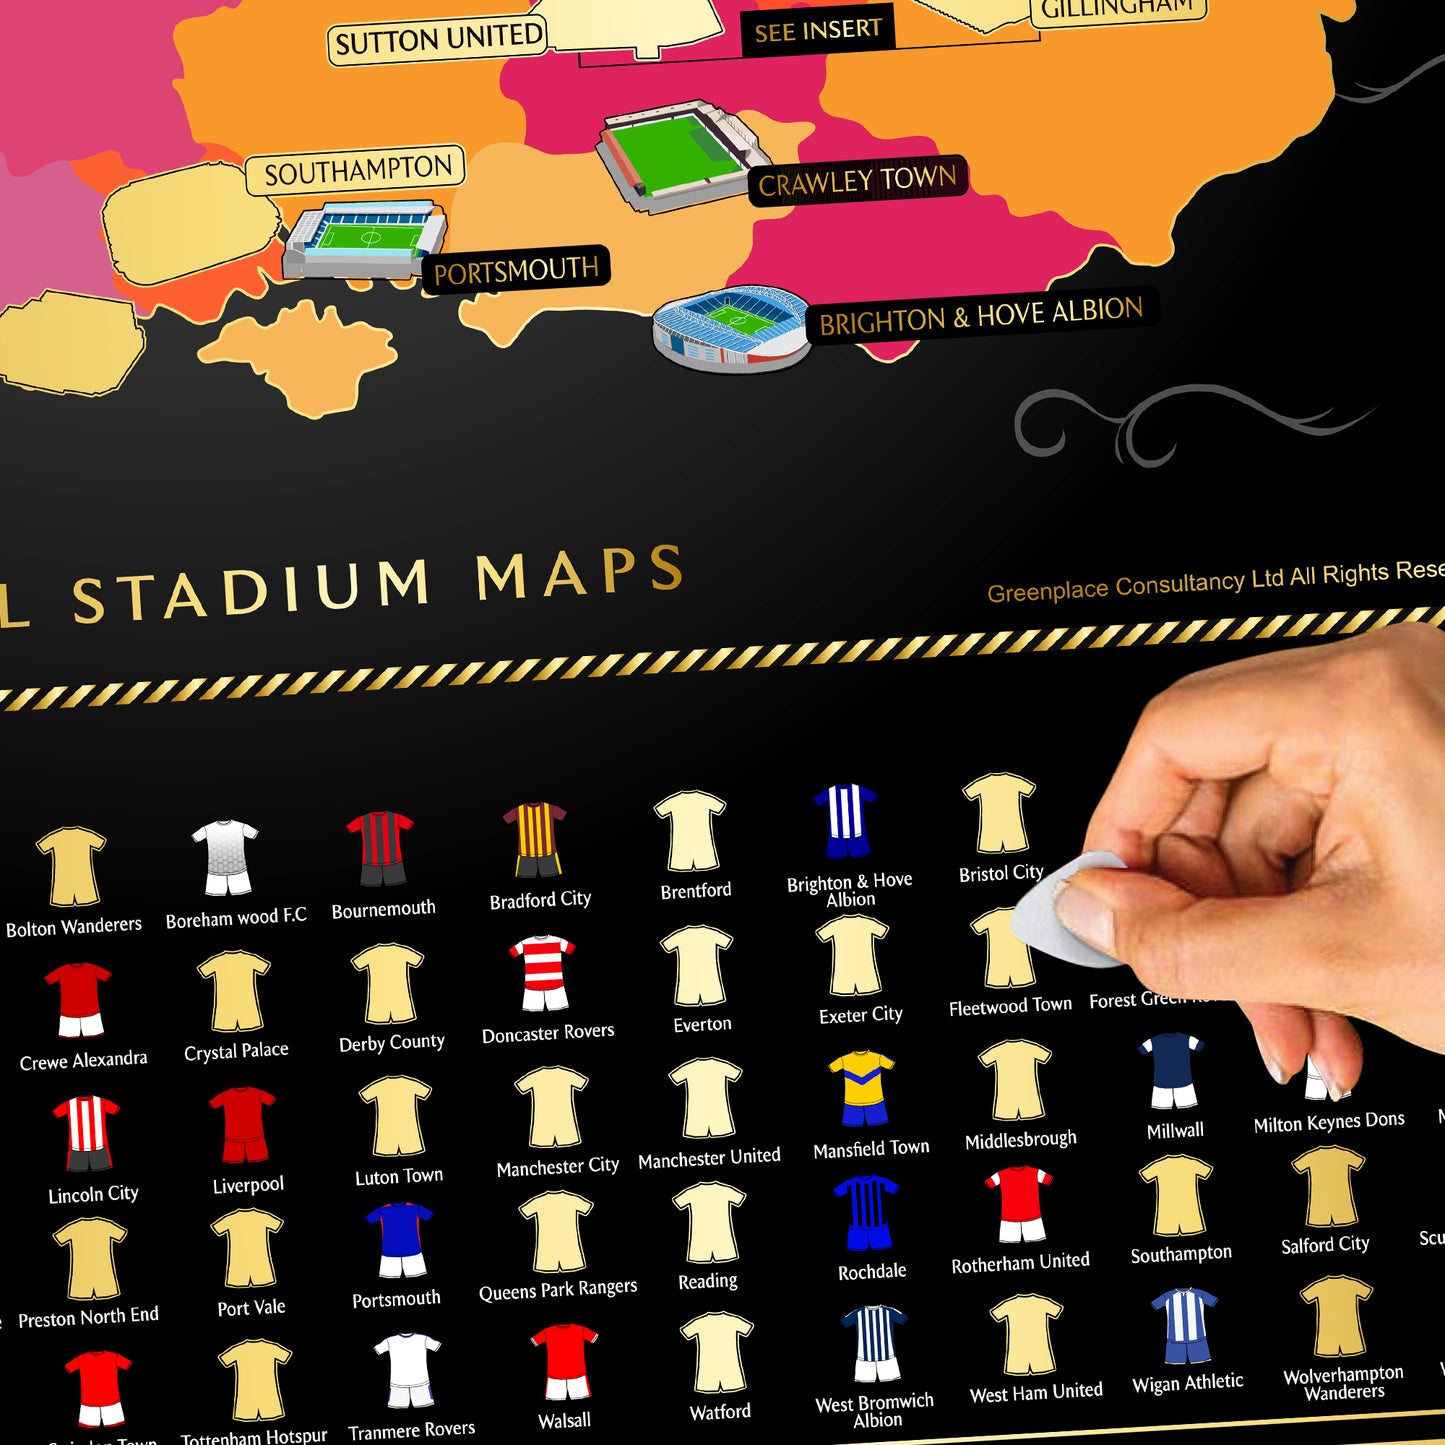 England Football Stadium Map